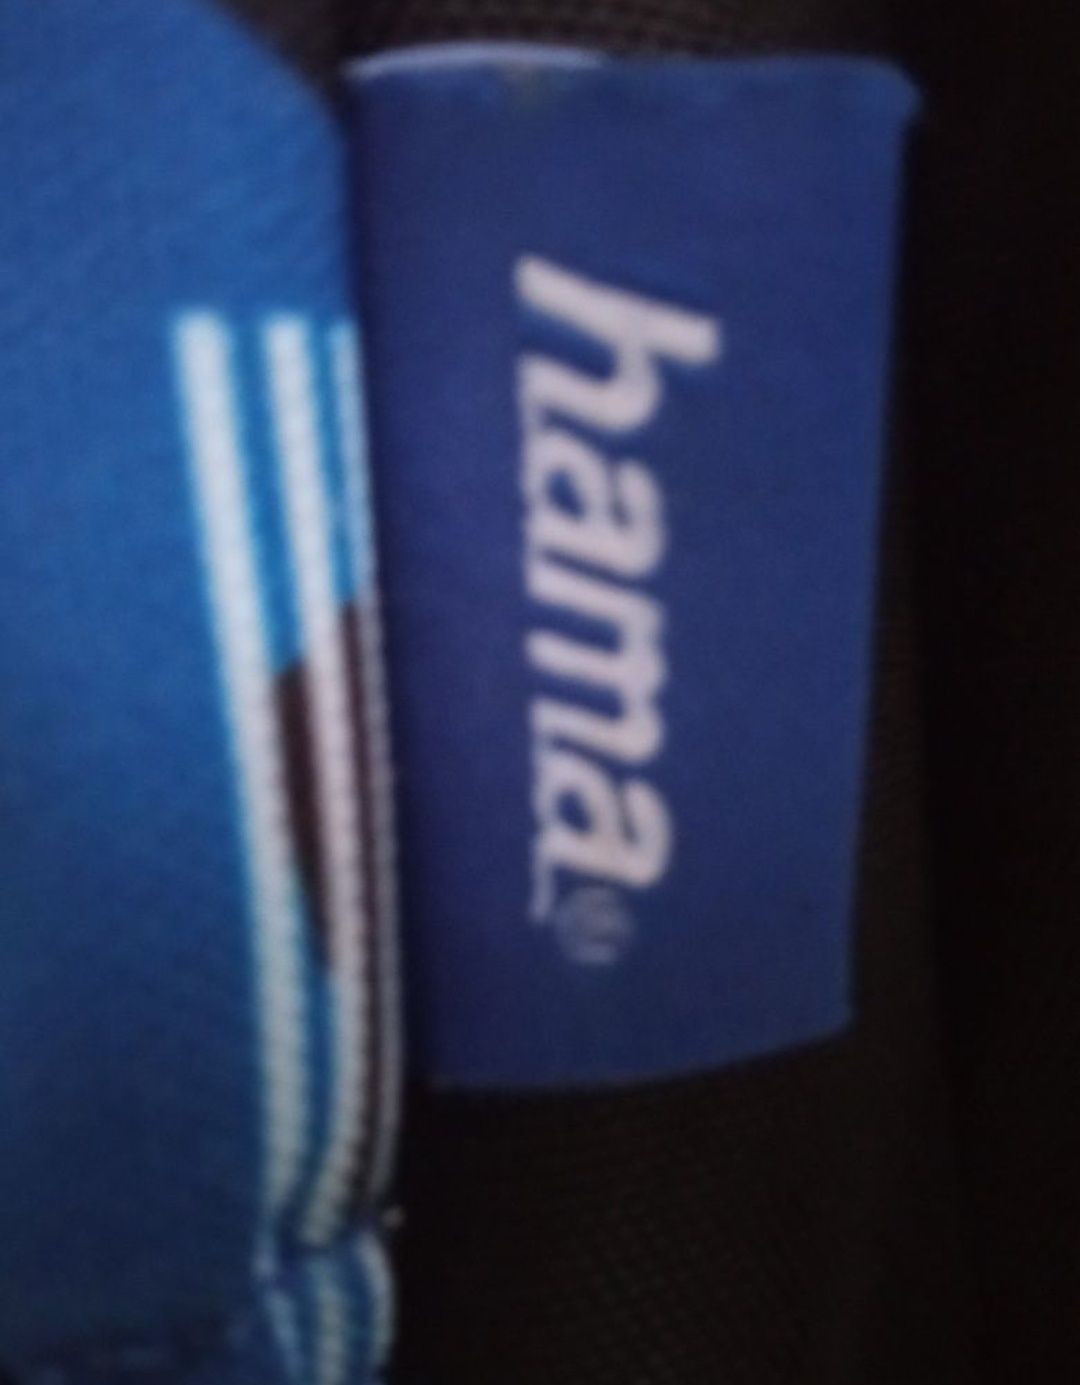 Tornister, plecak szkolny firmy HAMA model Blue Soccer